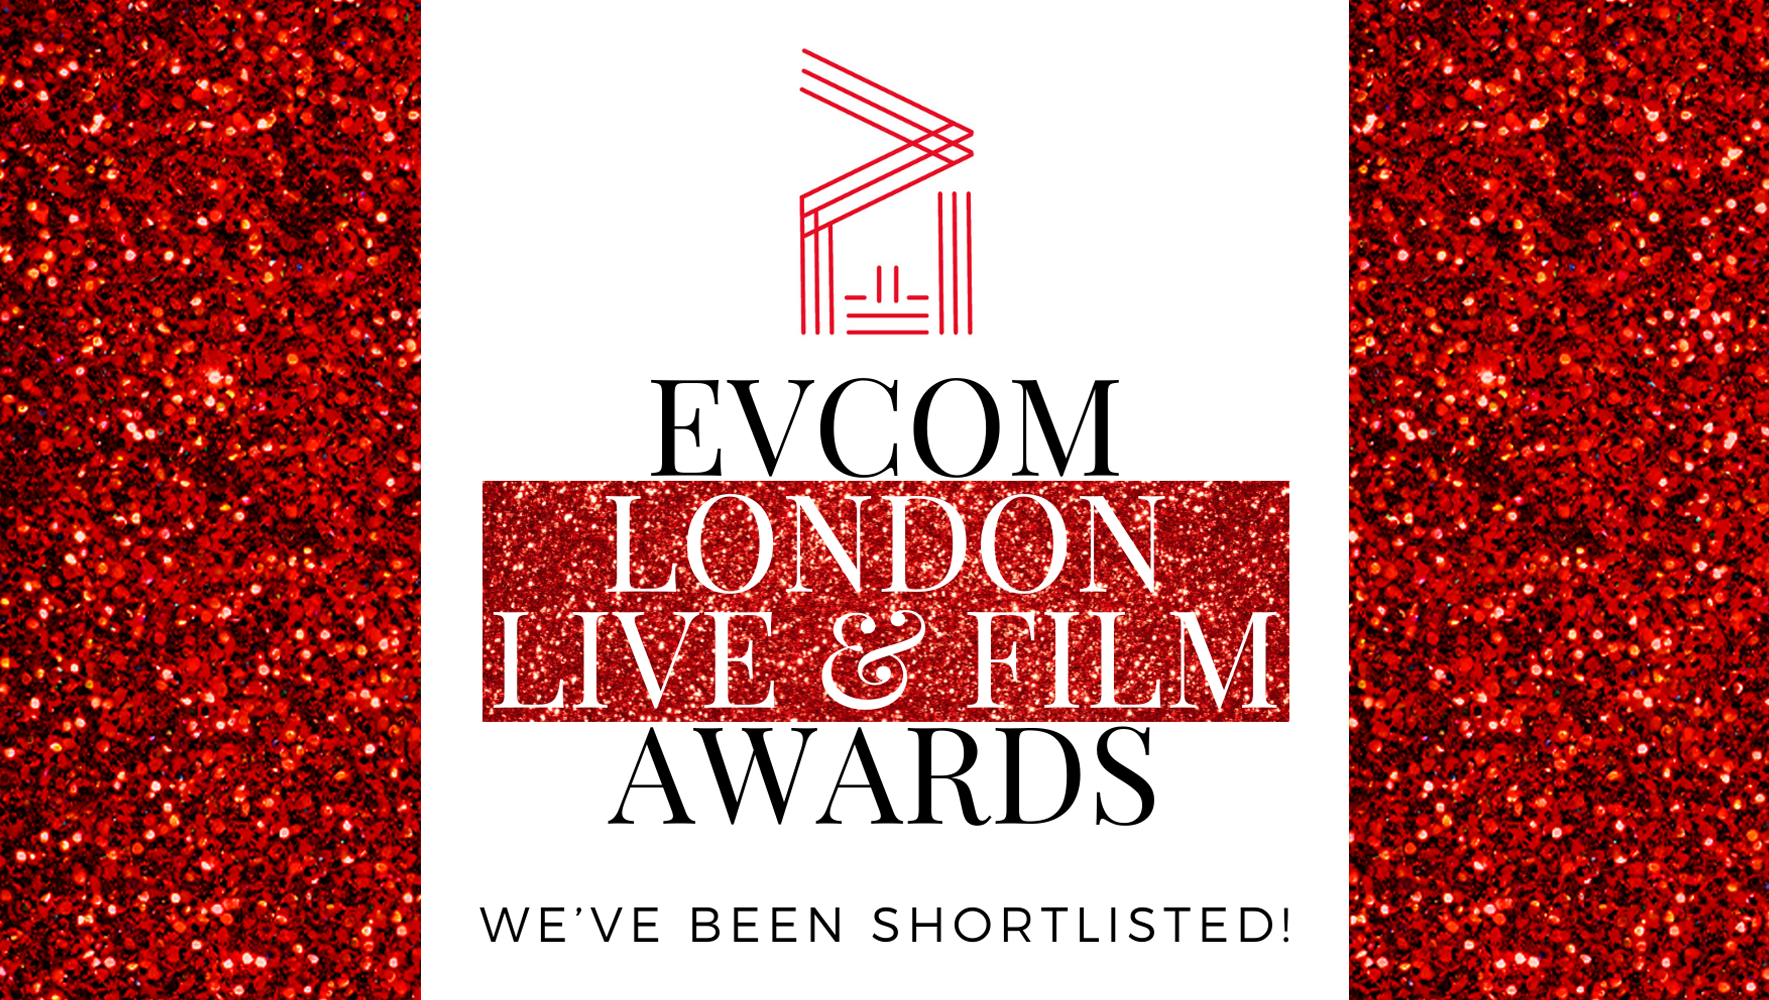 Big Button shortlisted for EVCOM Awards